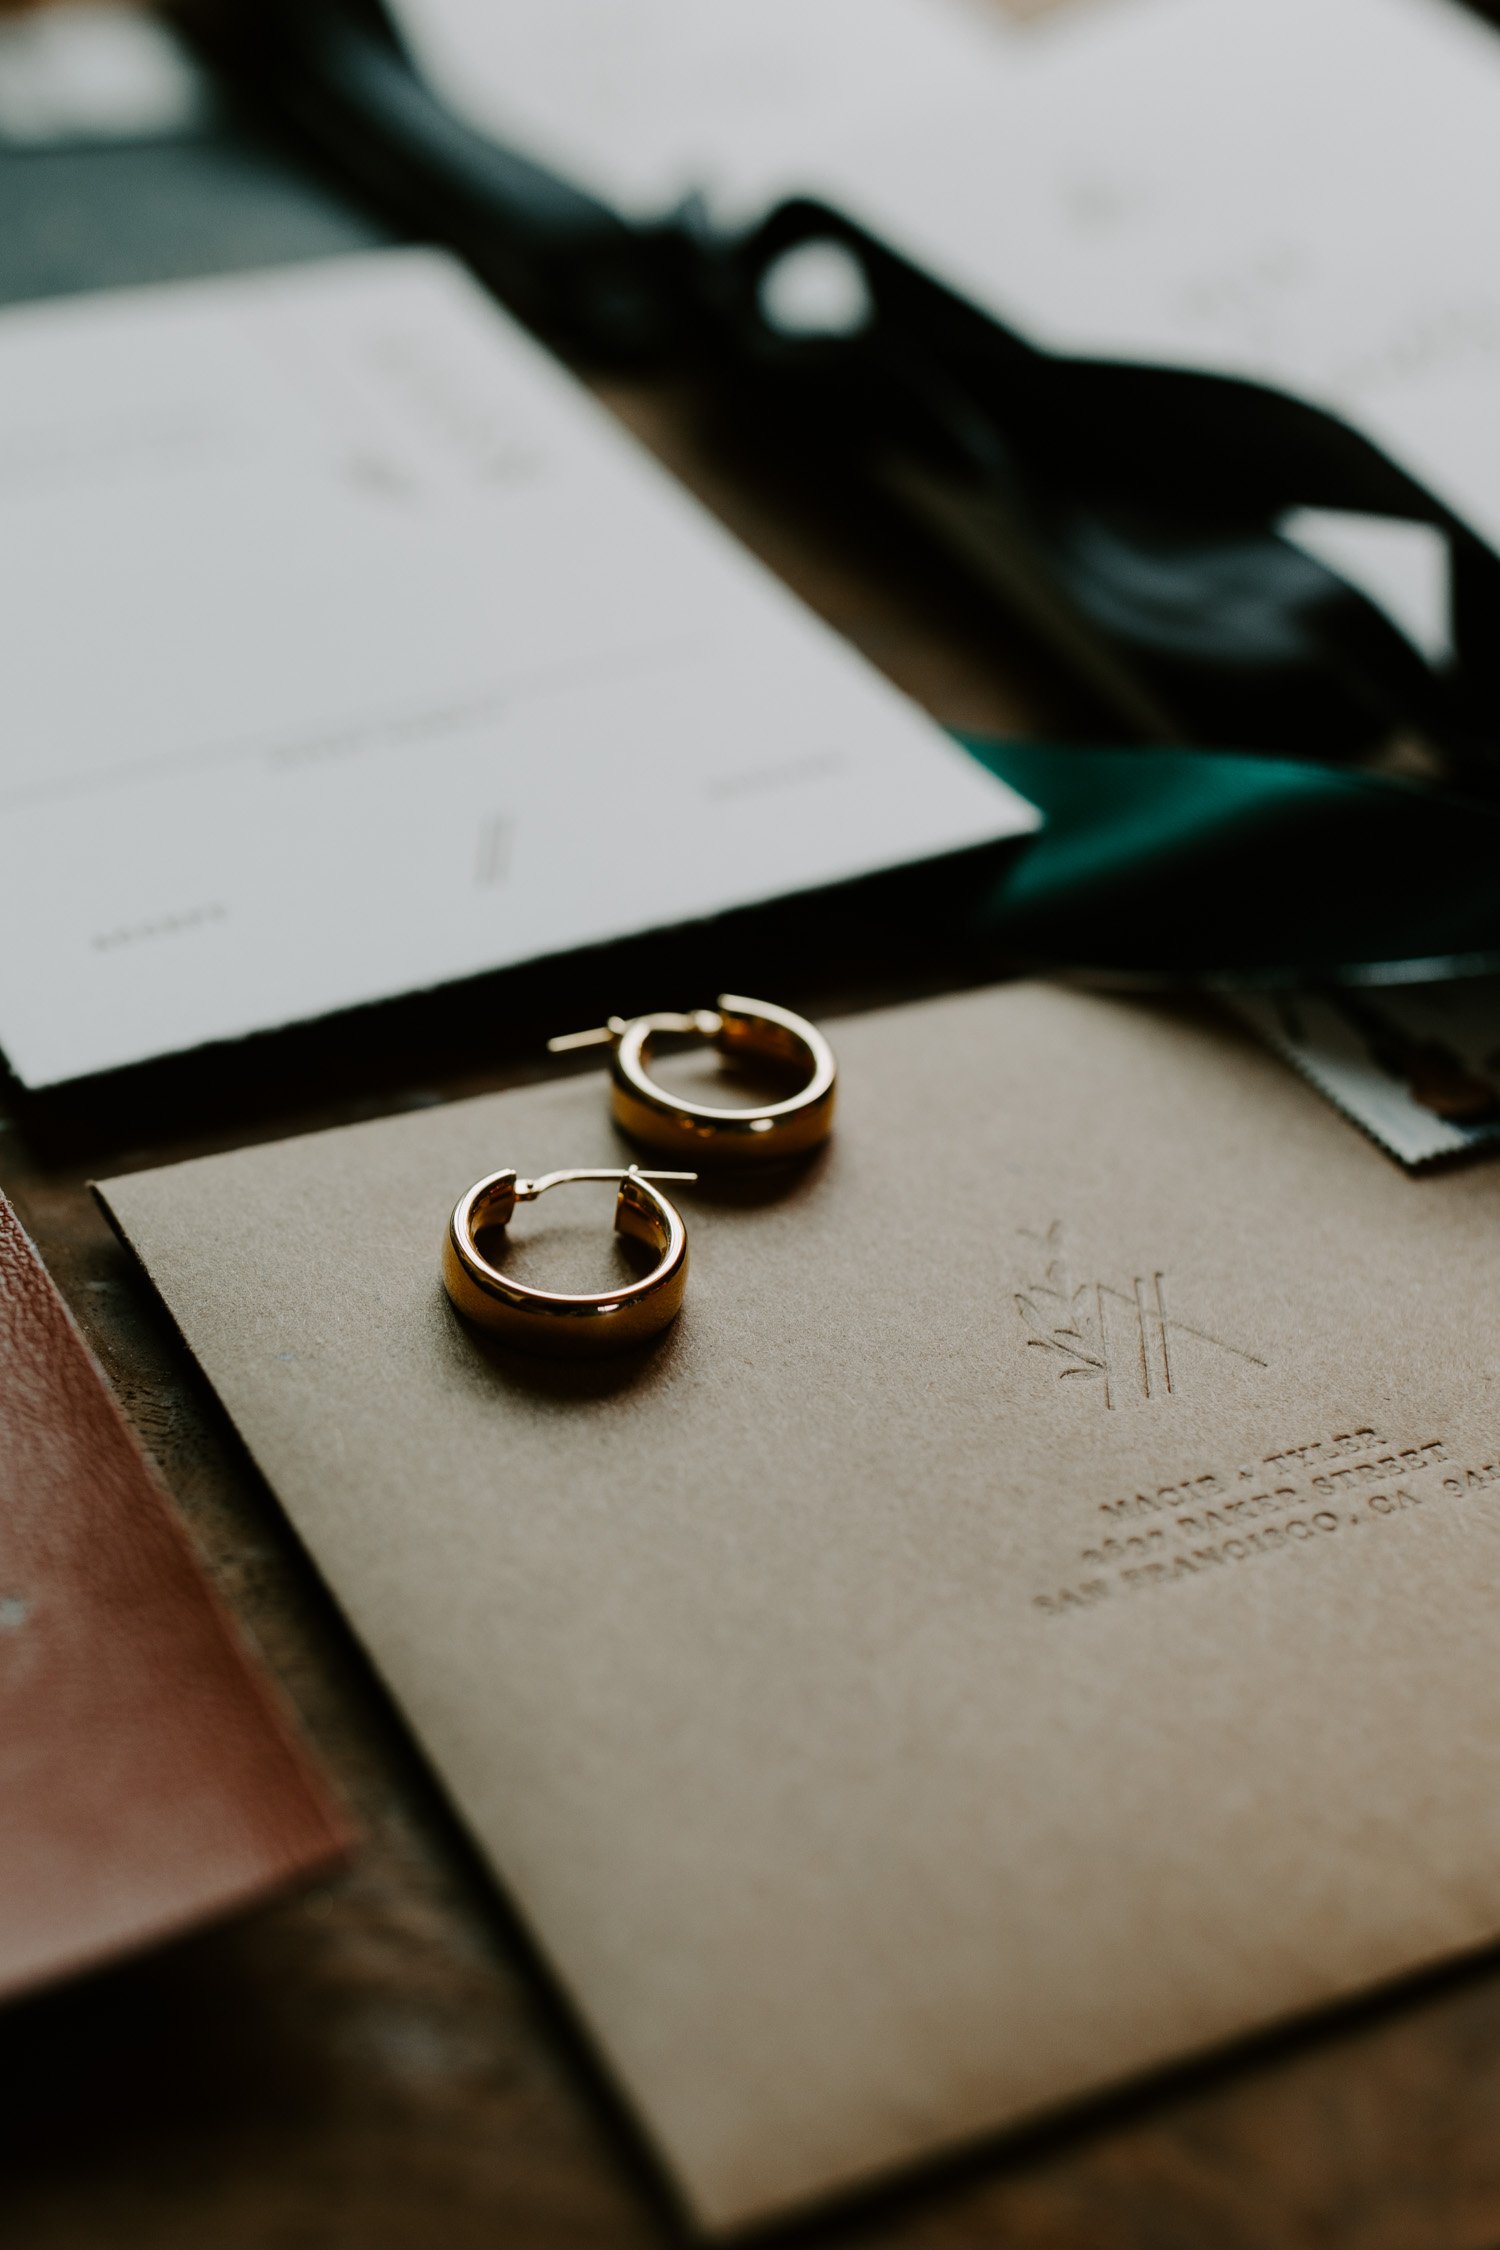 norcal wedding leather letterpress invitations-2.jpg